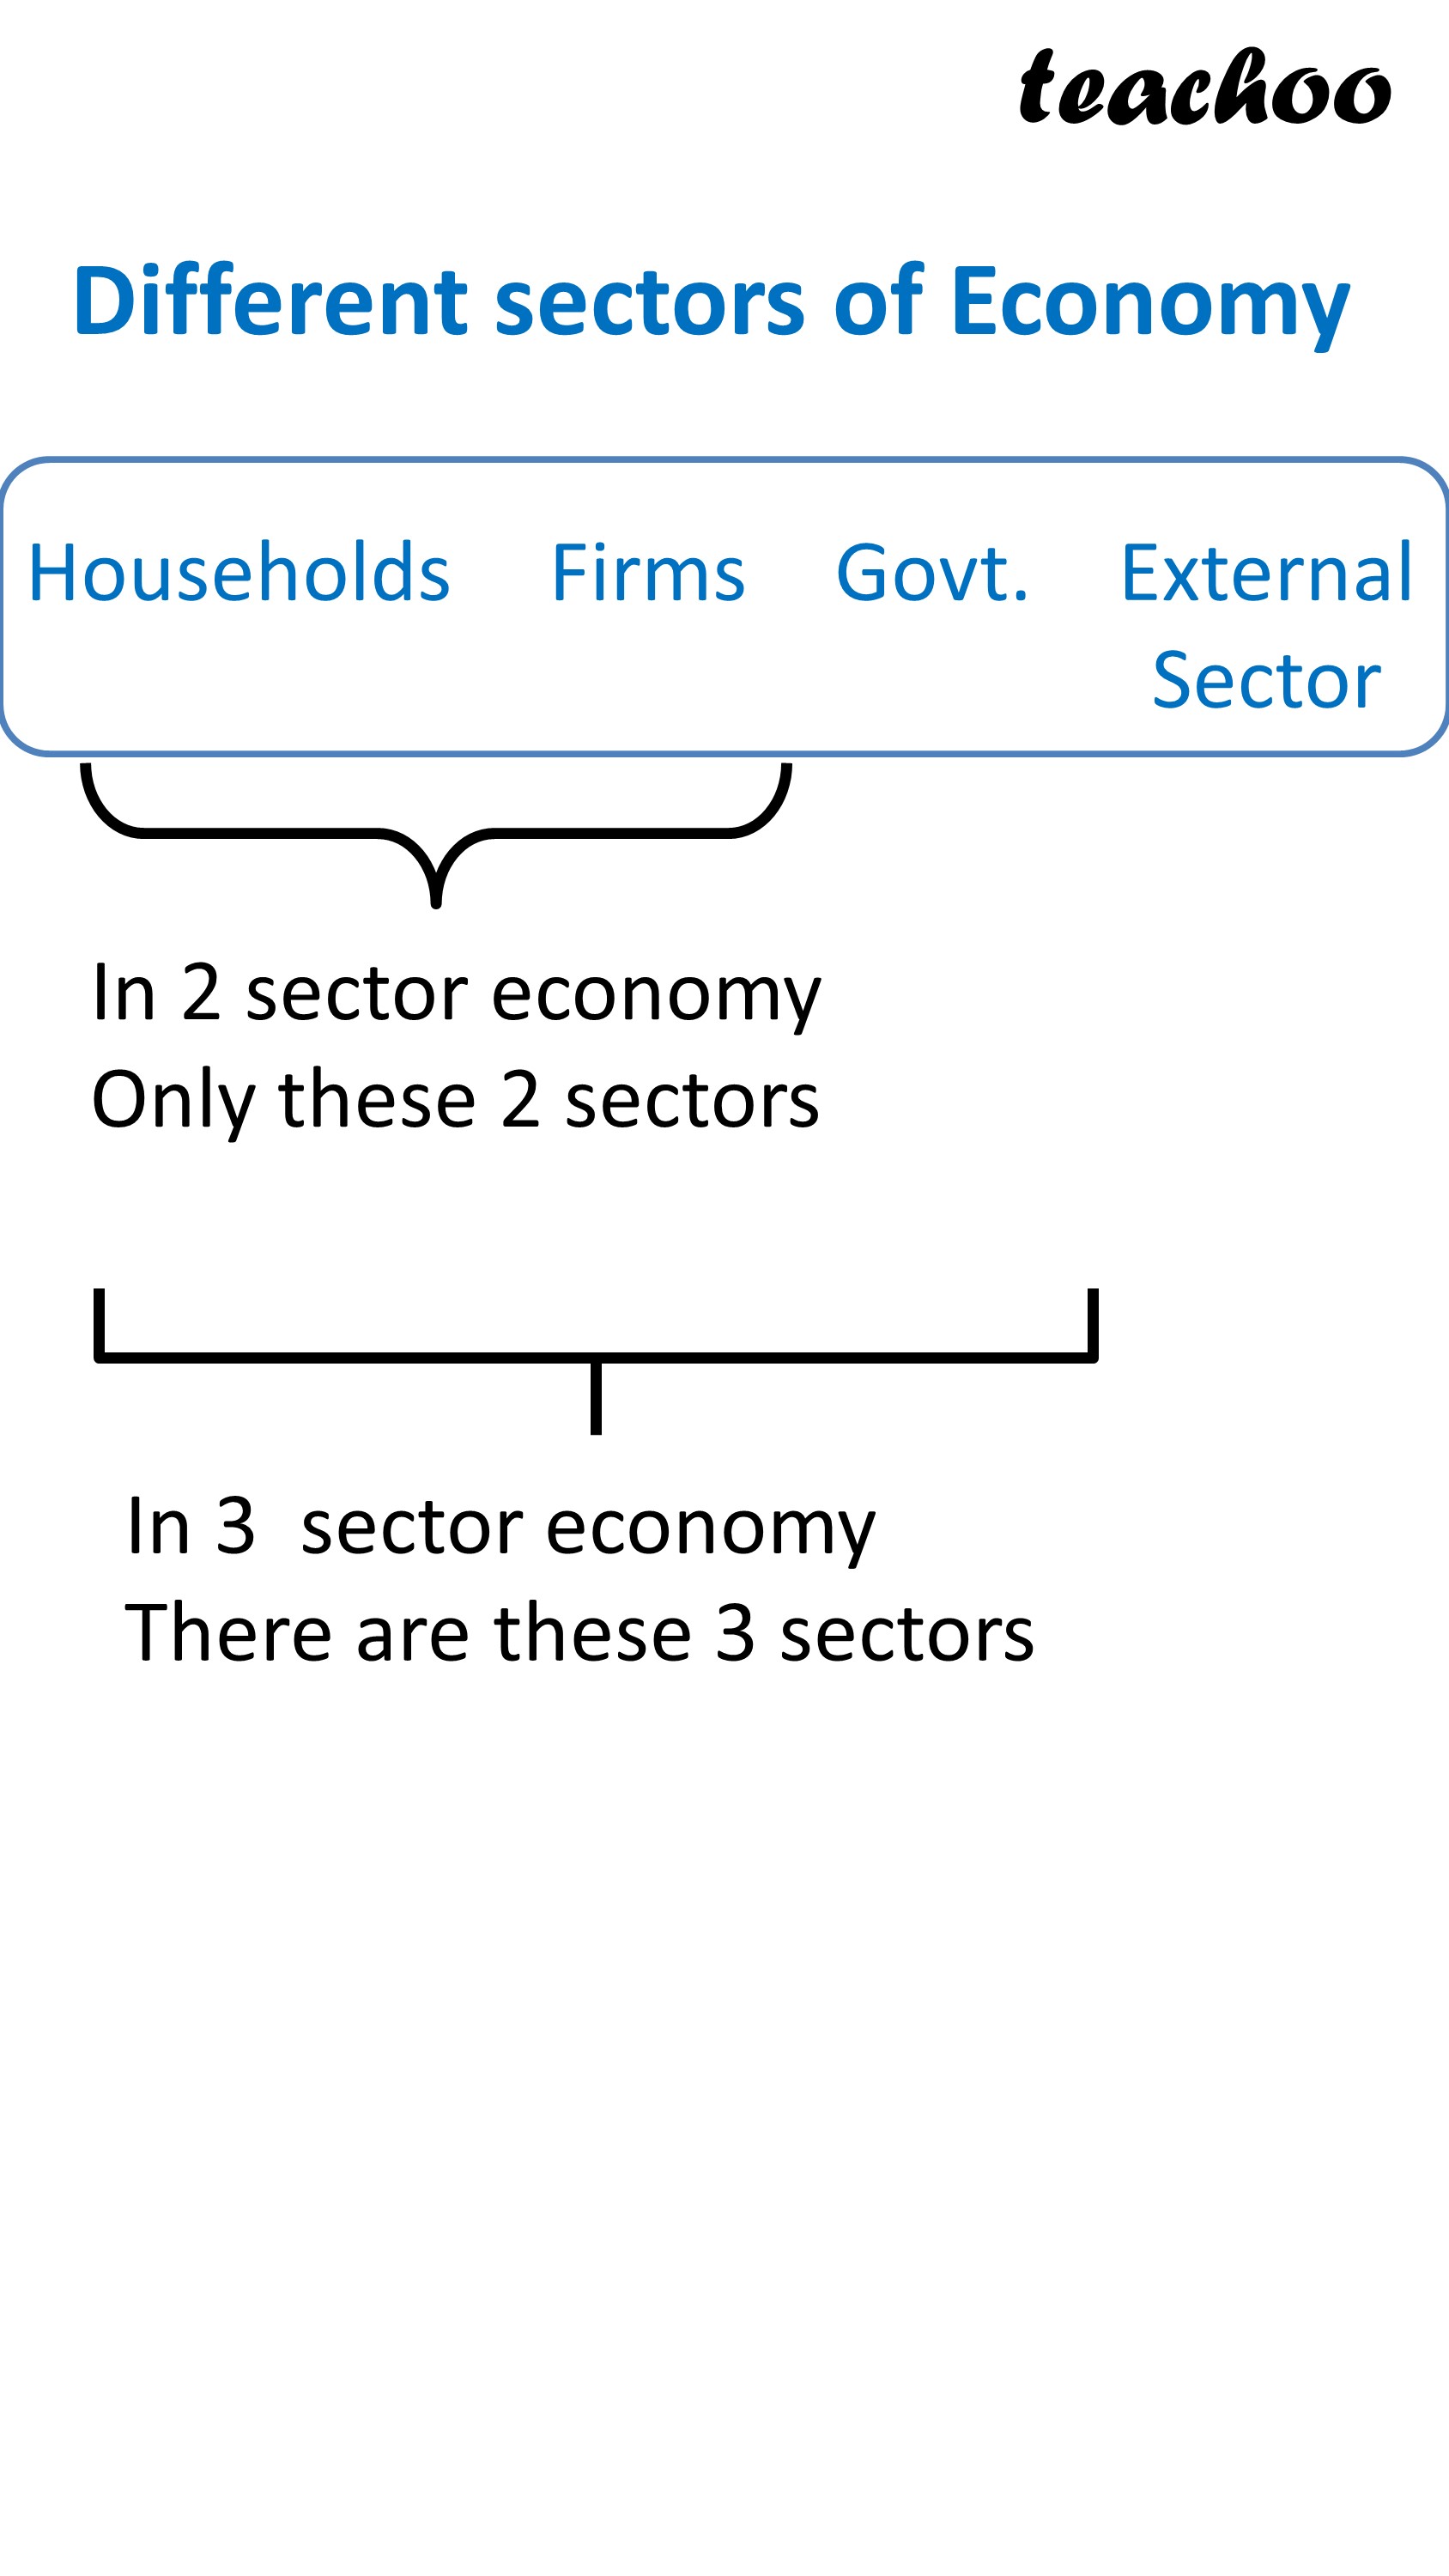 Different sectors of Economy - Teachoo.jpg